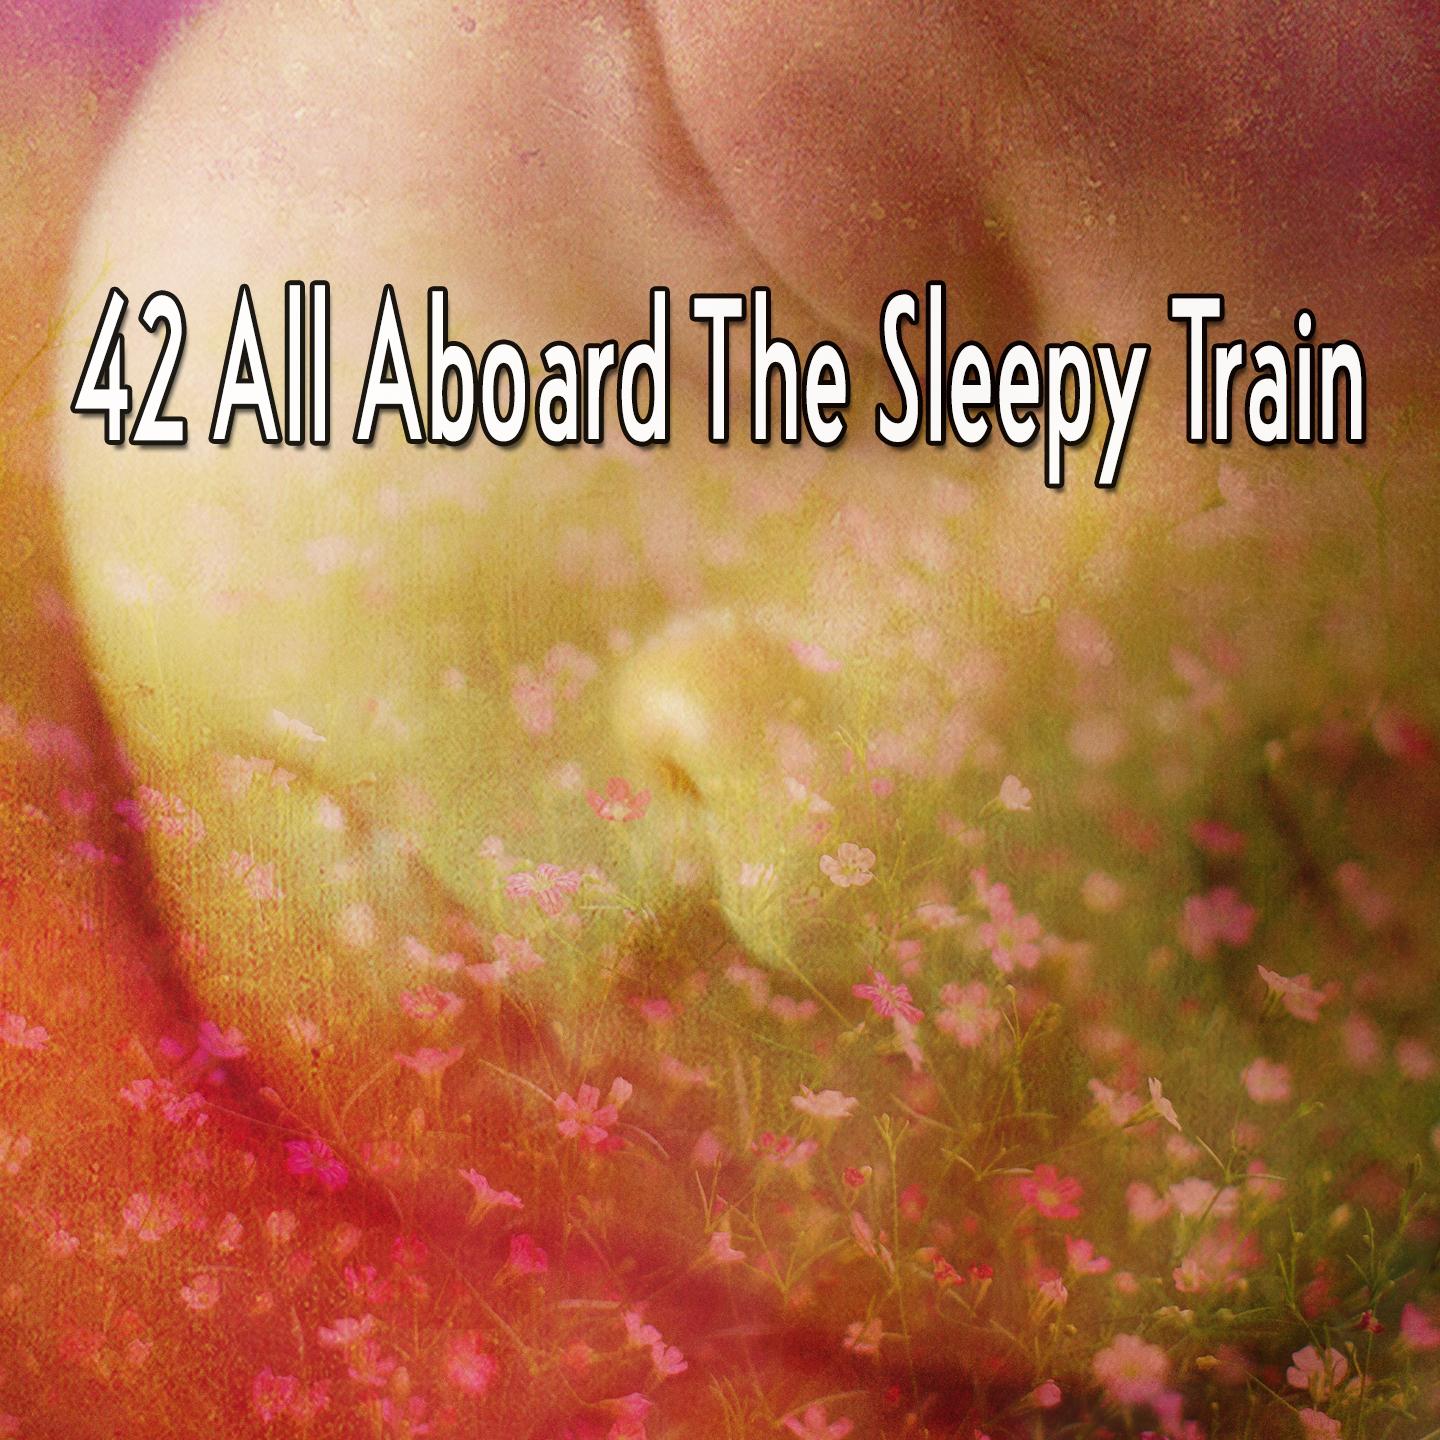 42 All Aboard the Sleepy Train